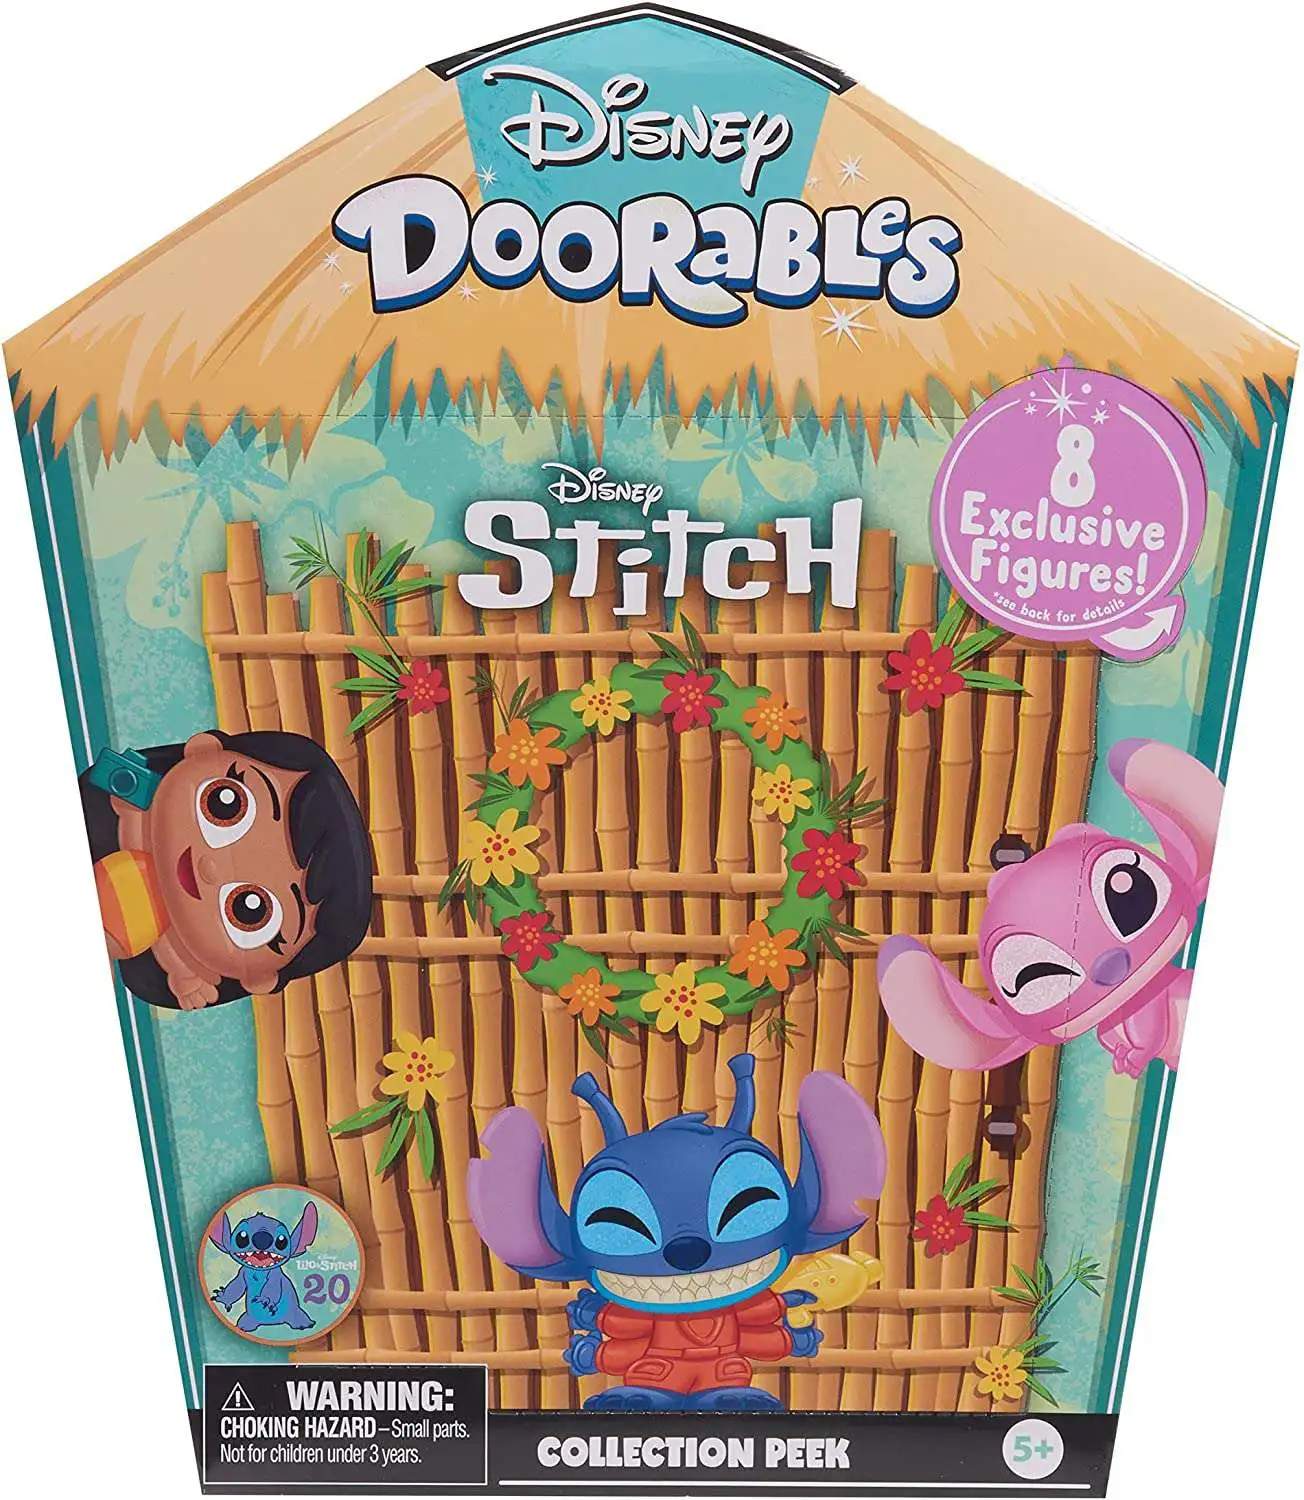 Disney Doorables Movie Moments Series 1 Lilo & Stitch Toys Mini Figures New